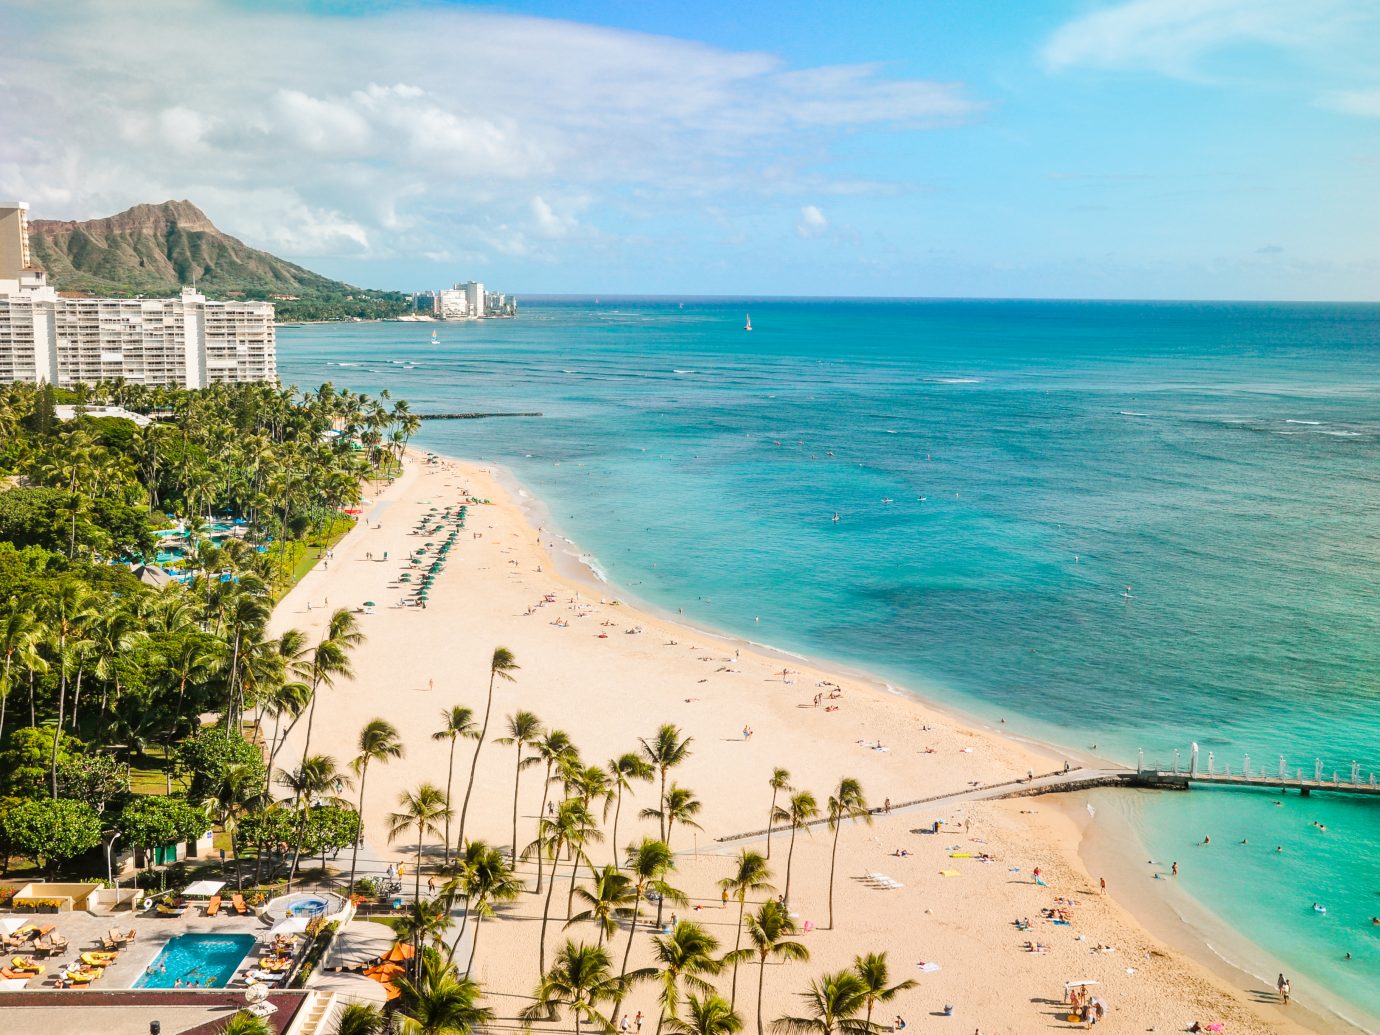 Aerial view of Waikiki Beach in Hawaii